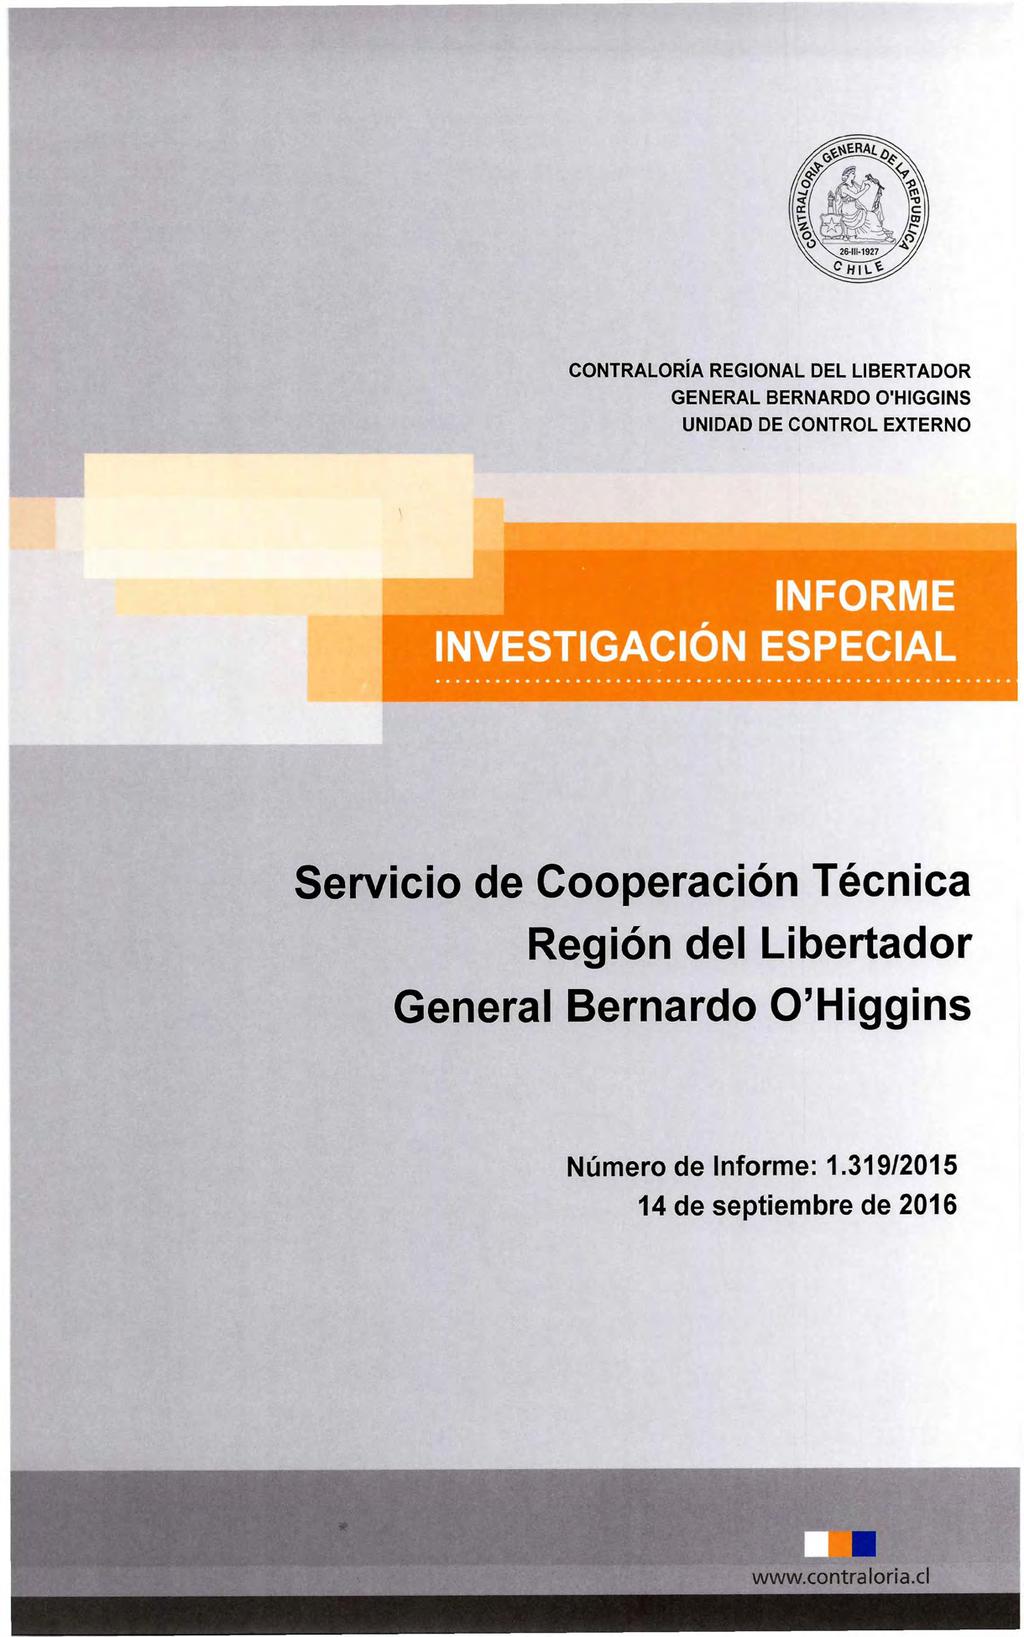 CONTRALORÍA REGIONAL DEL LIBERTADOR GENERAL BERNARDO O'HIGGINS INFORME INVESTIGACIÓN ESPECIAL Servicio de Cooperación Técnica